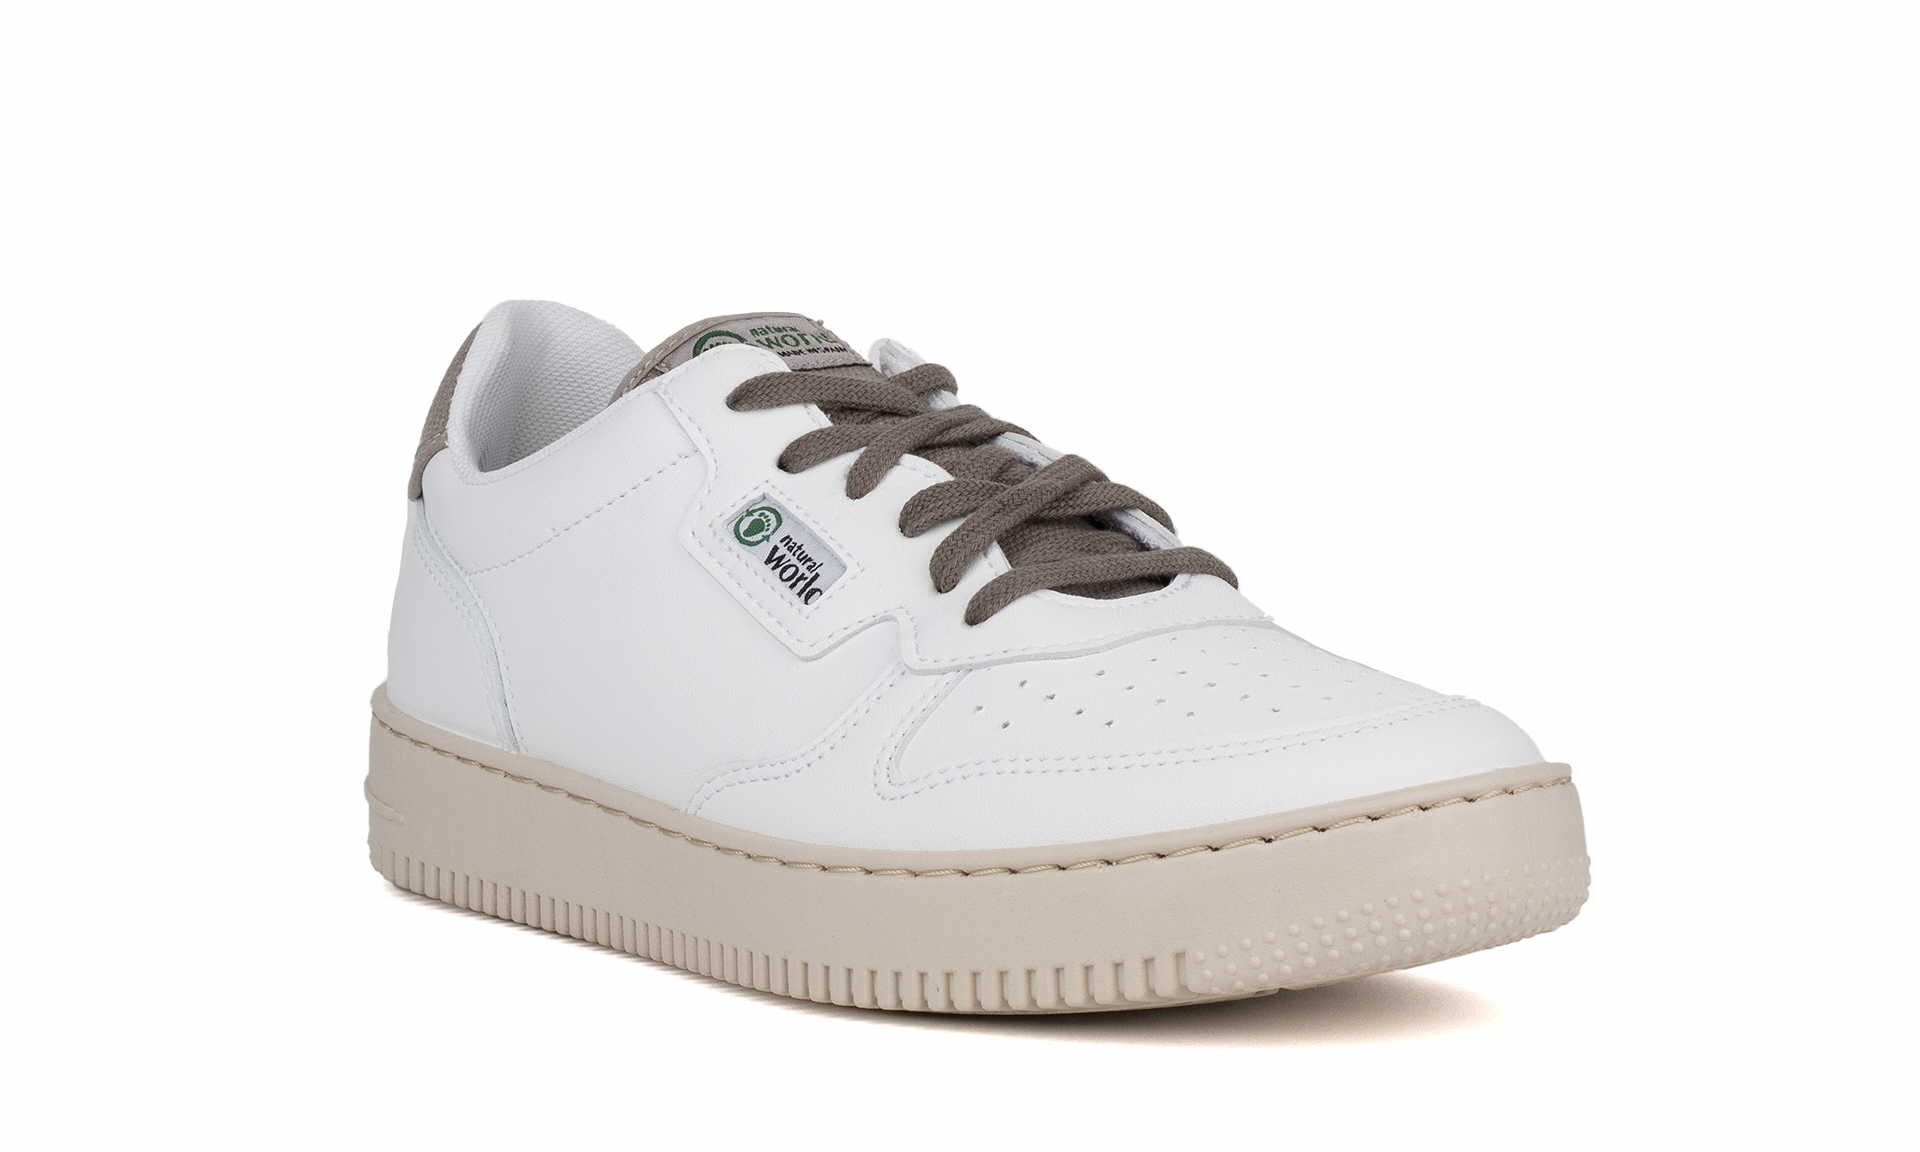 Vegan Sneaker | NATURAL WORLD Lowcut Sneaker white/grey | avesu VEGAN SHOES